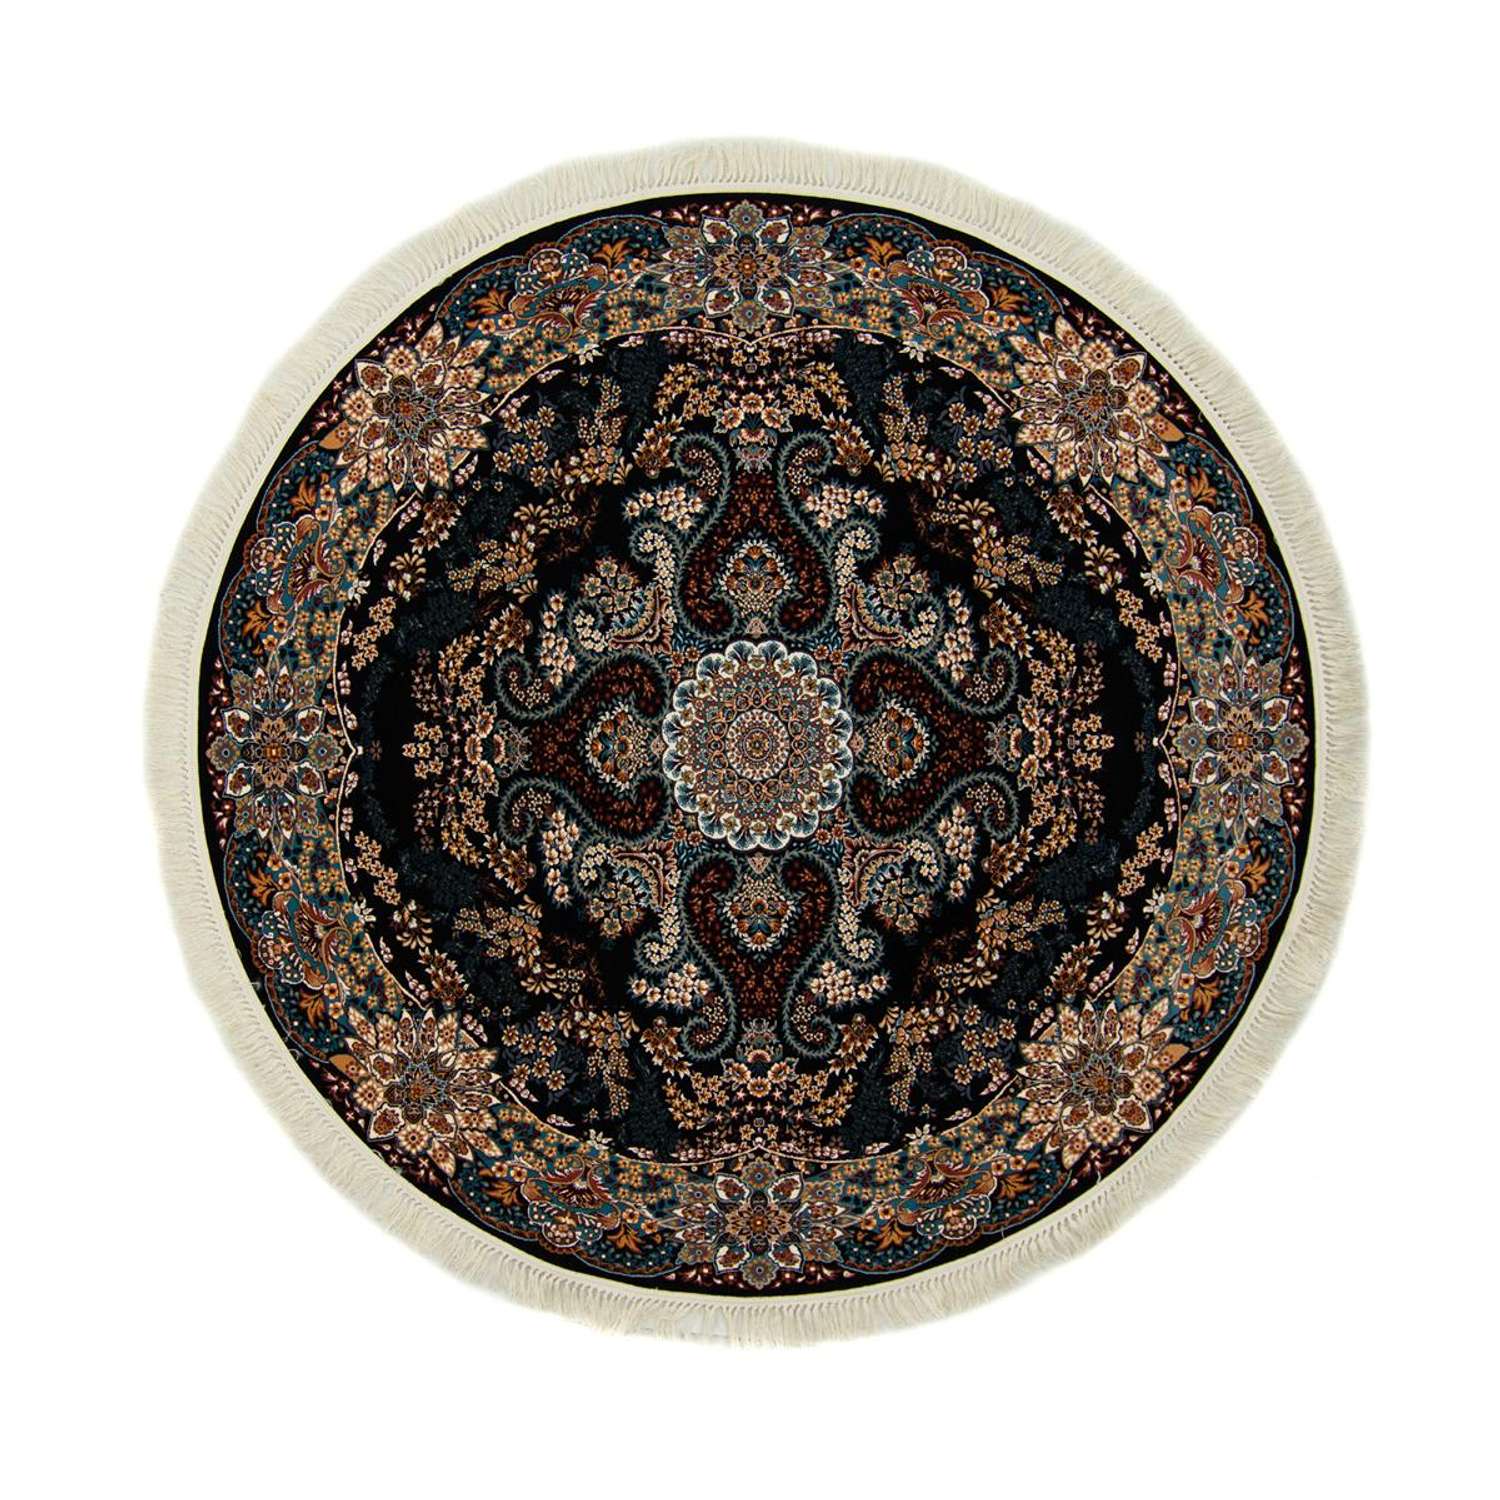 Orientální koberec - Ahu - oválný